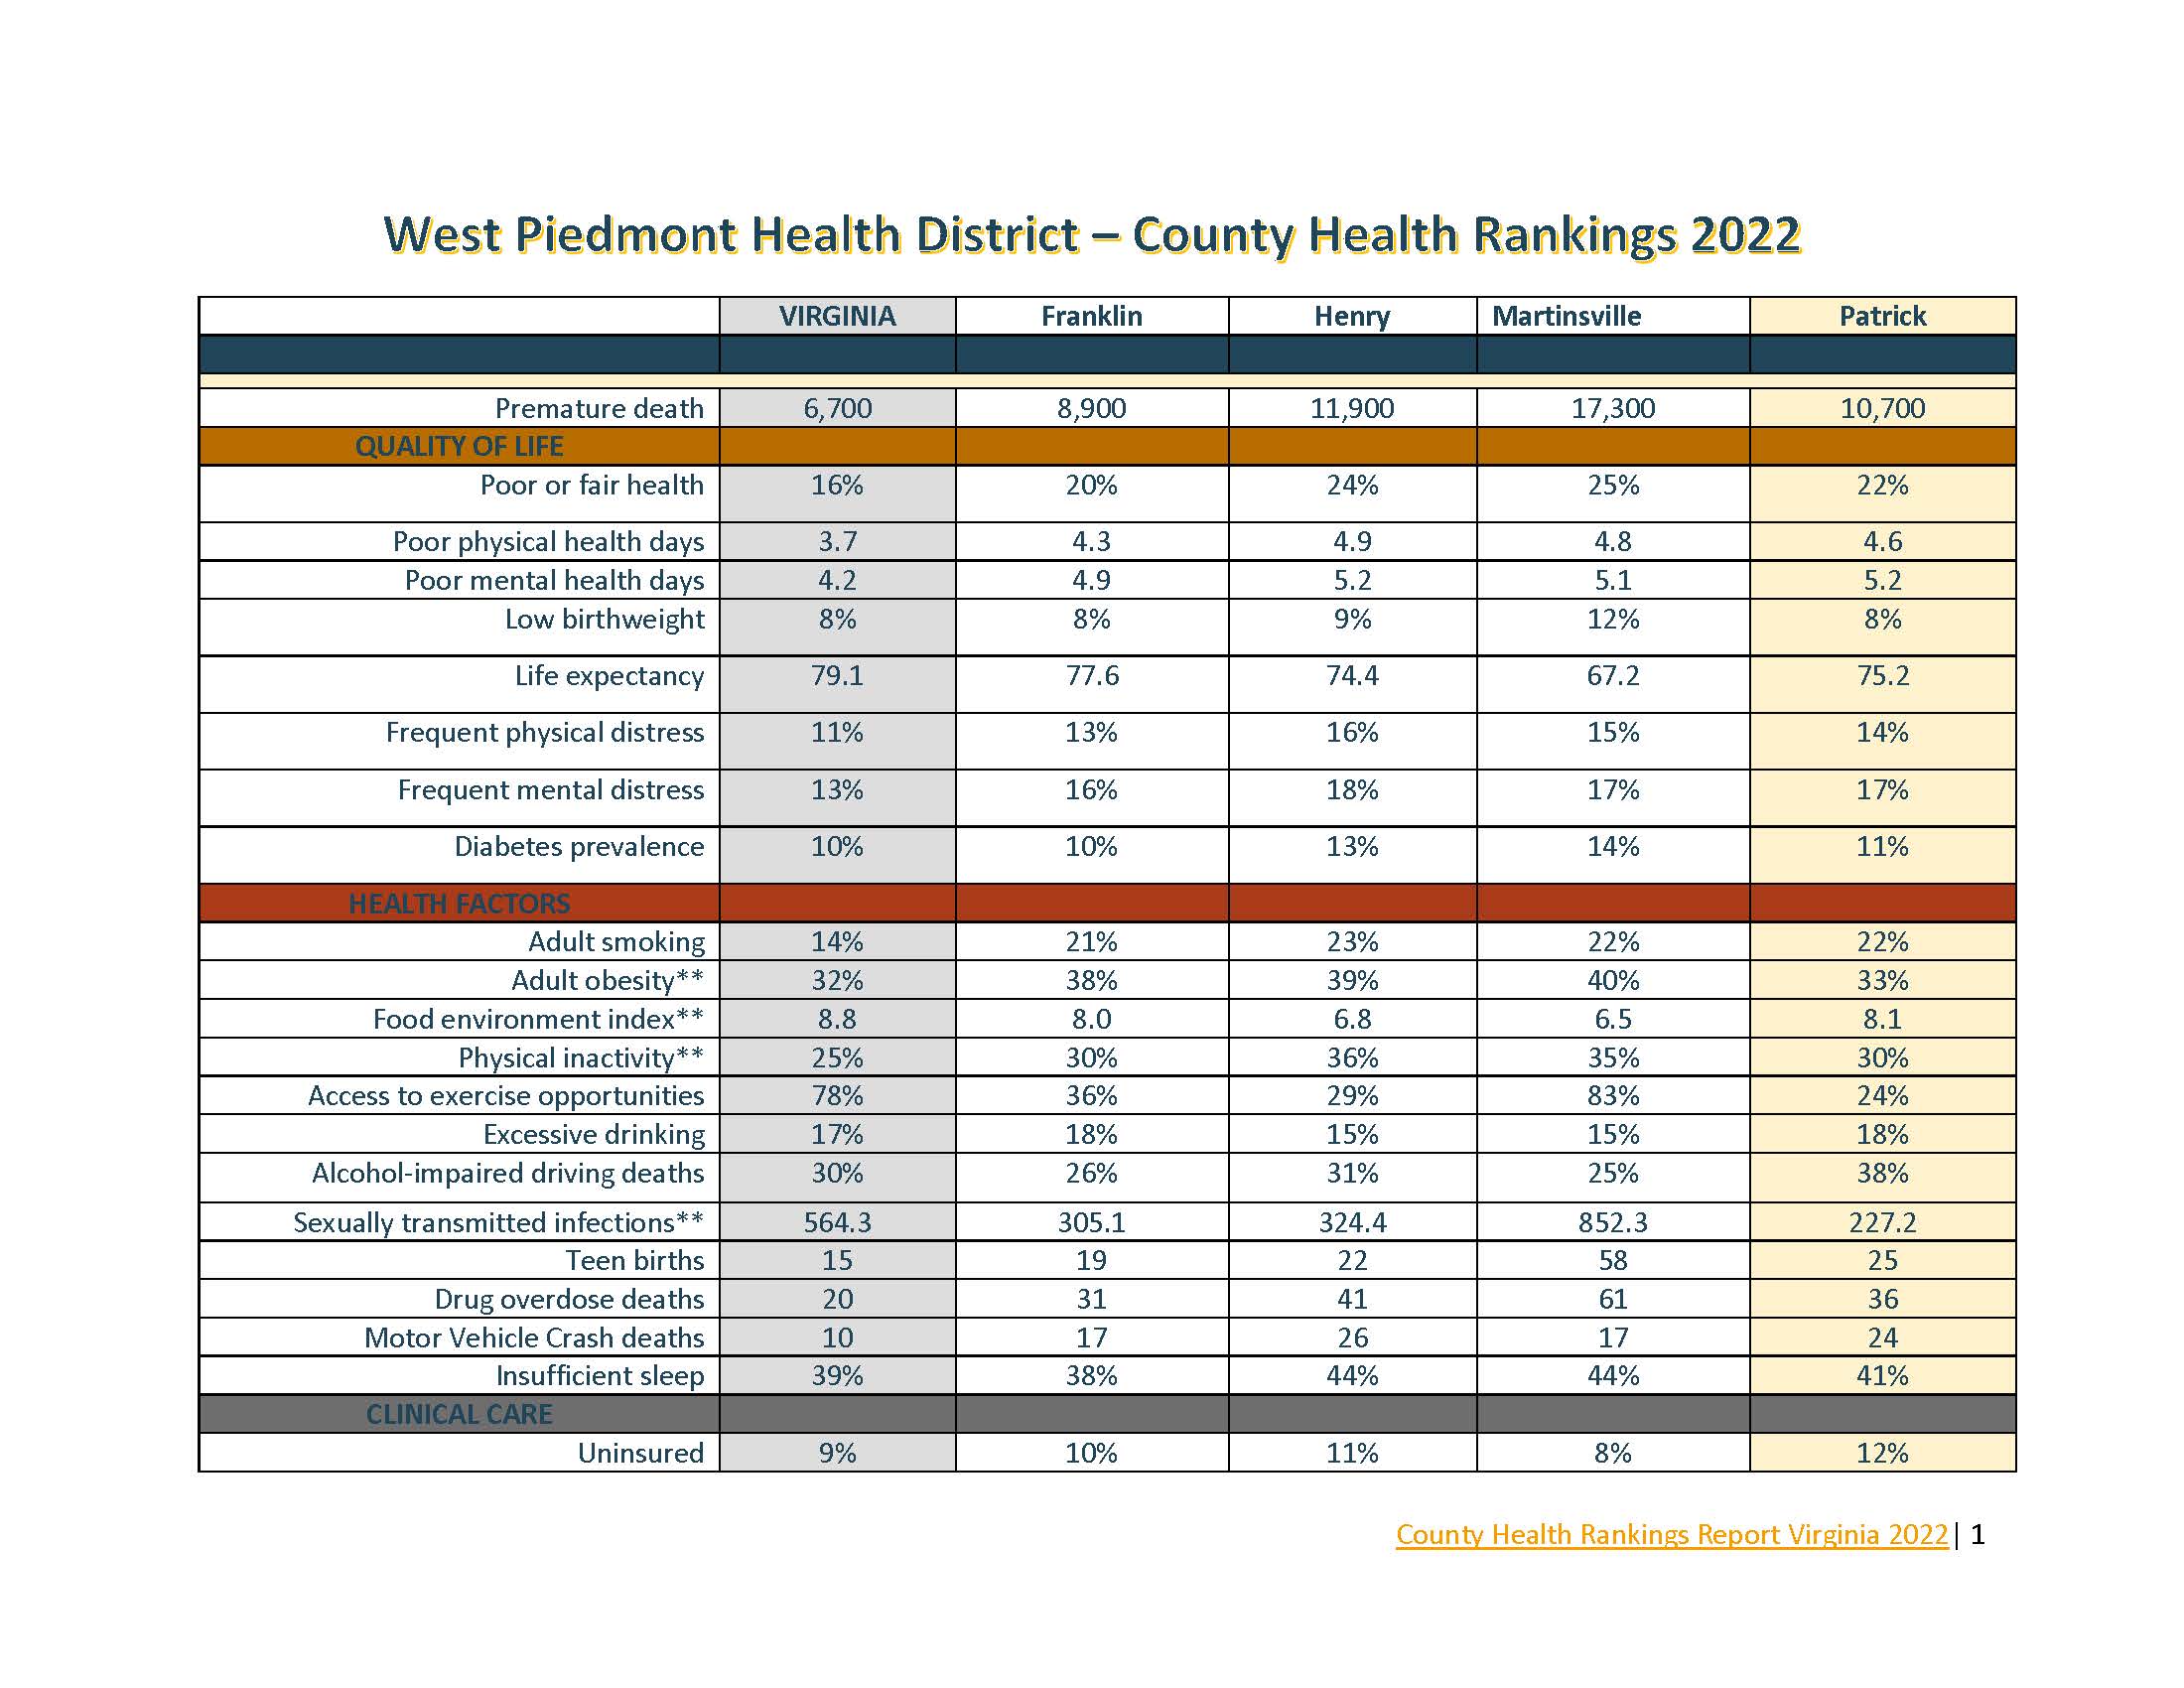 County Health Rankings West Piedmont